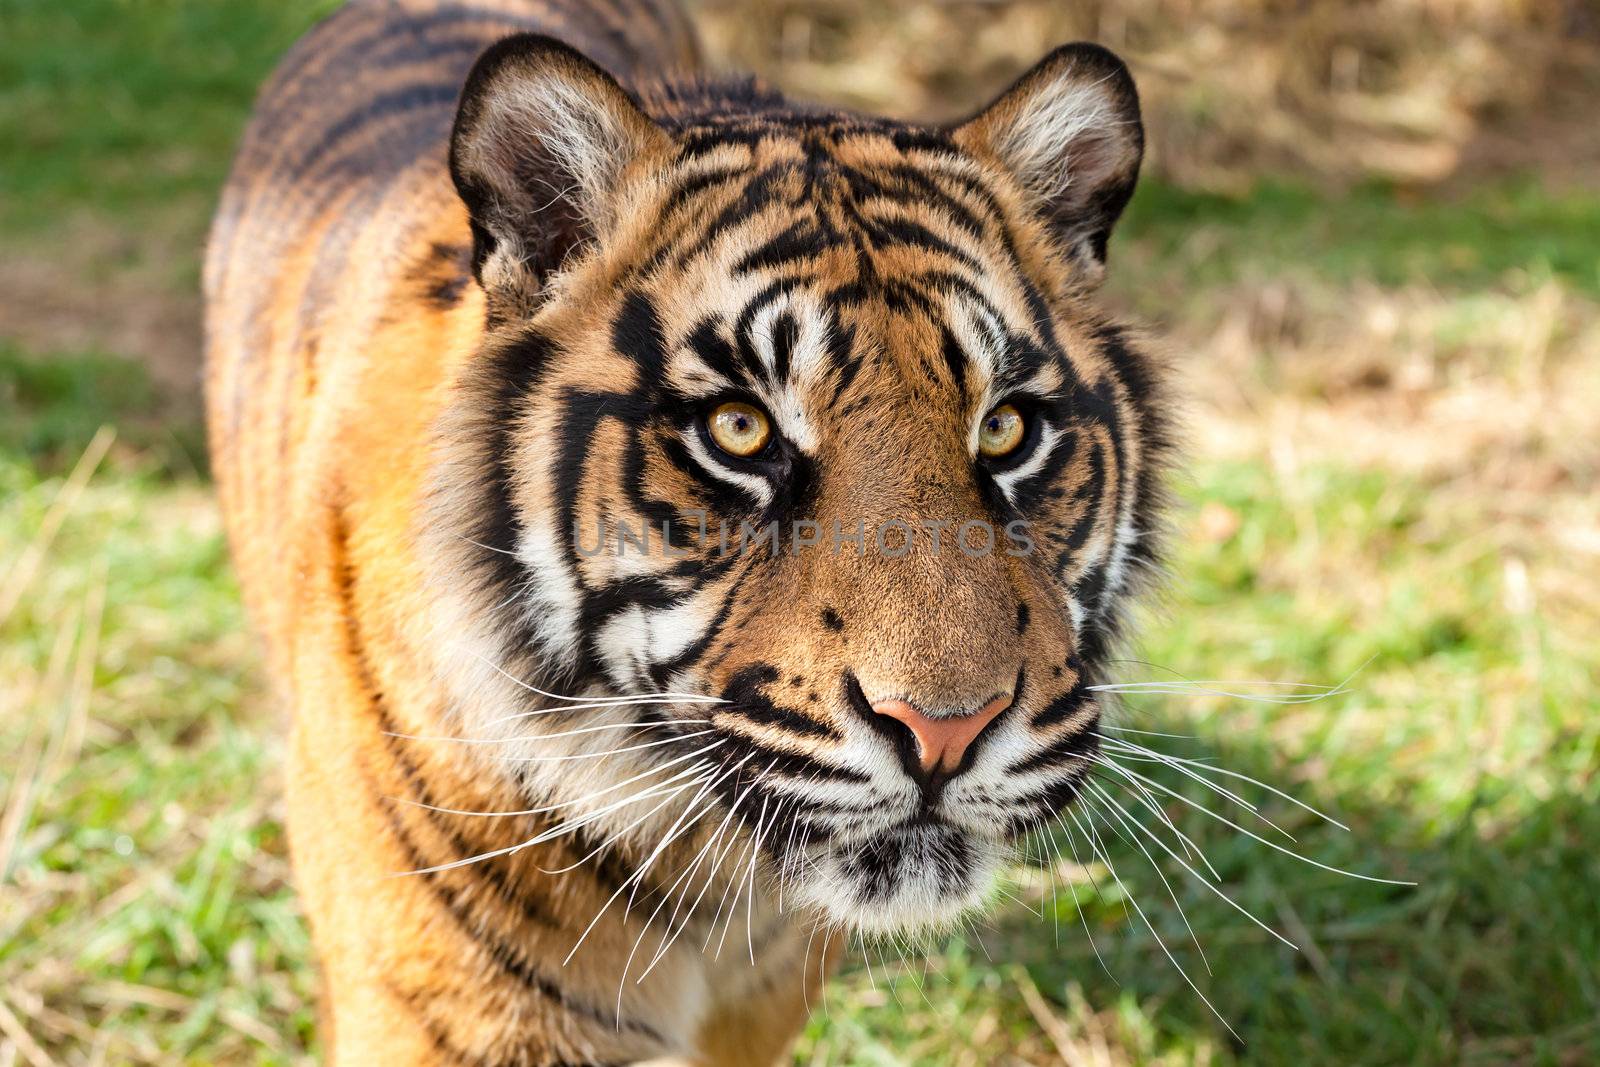 Close up of Sumatran Tiger in Afternoon Sunshine by scheriton